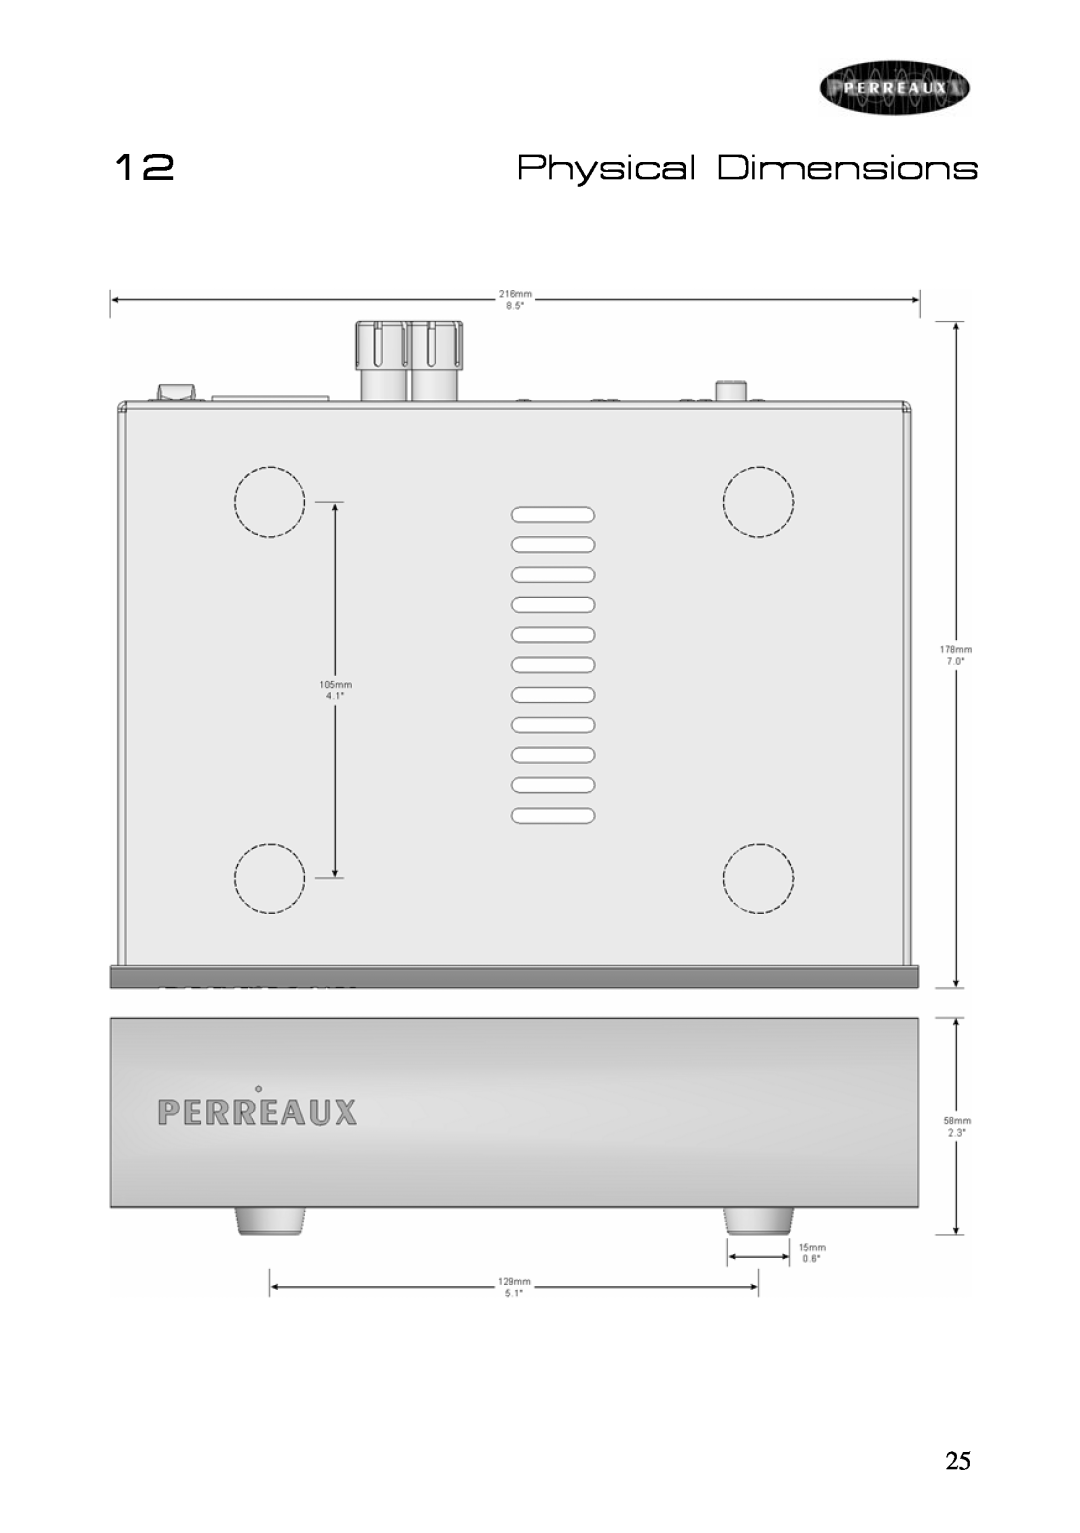 Perreaux SX60m manual Physical Dimensions 